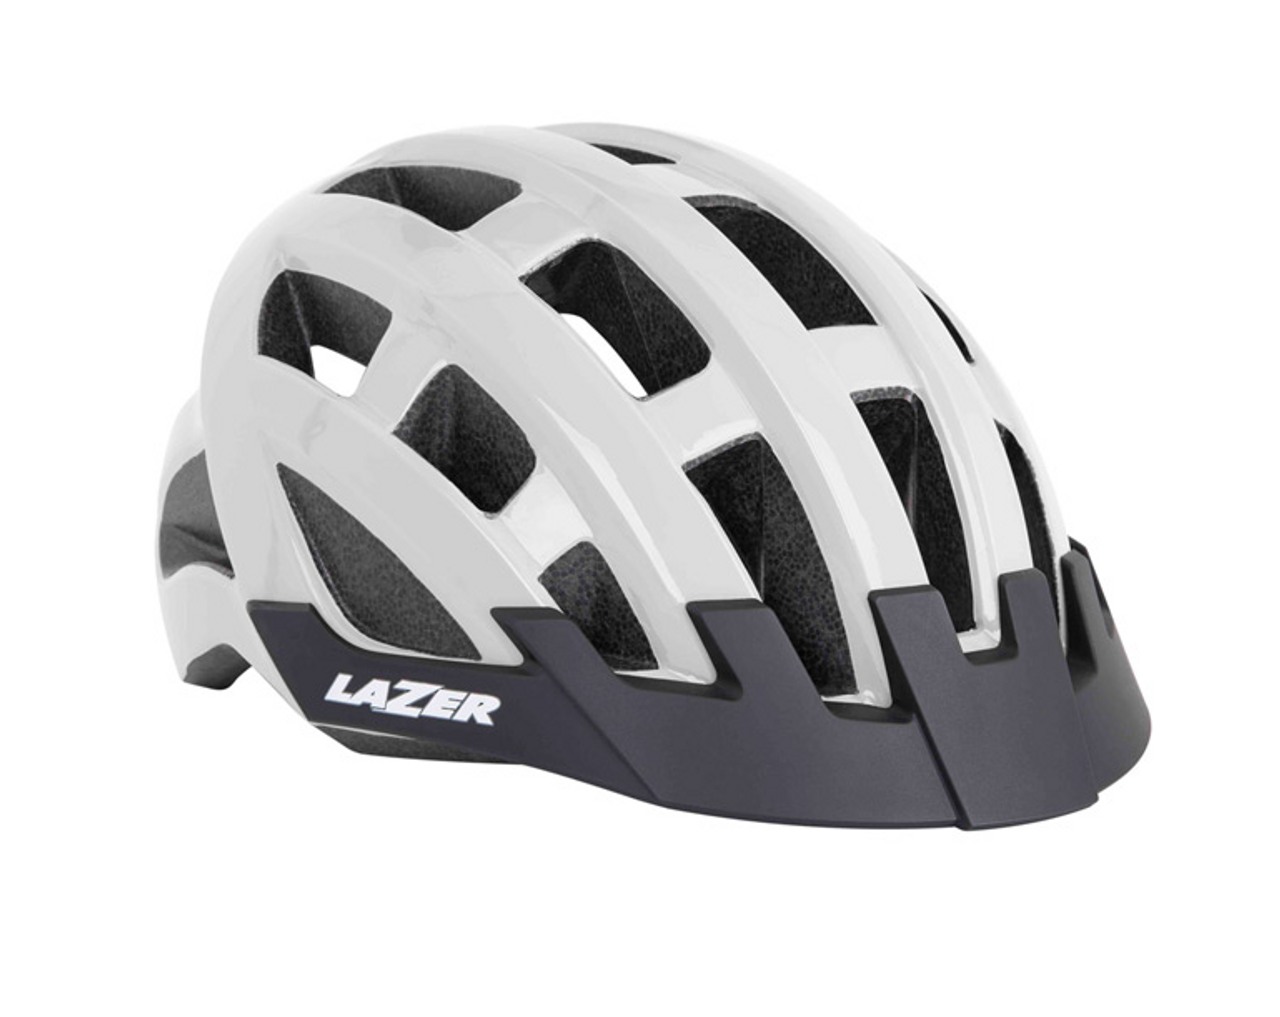 Lazer Compact Adult Urban/Commuter Helmet